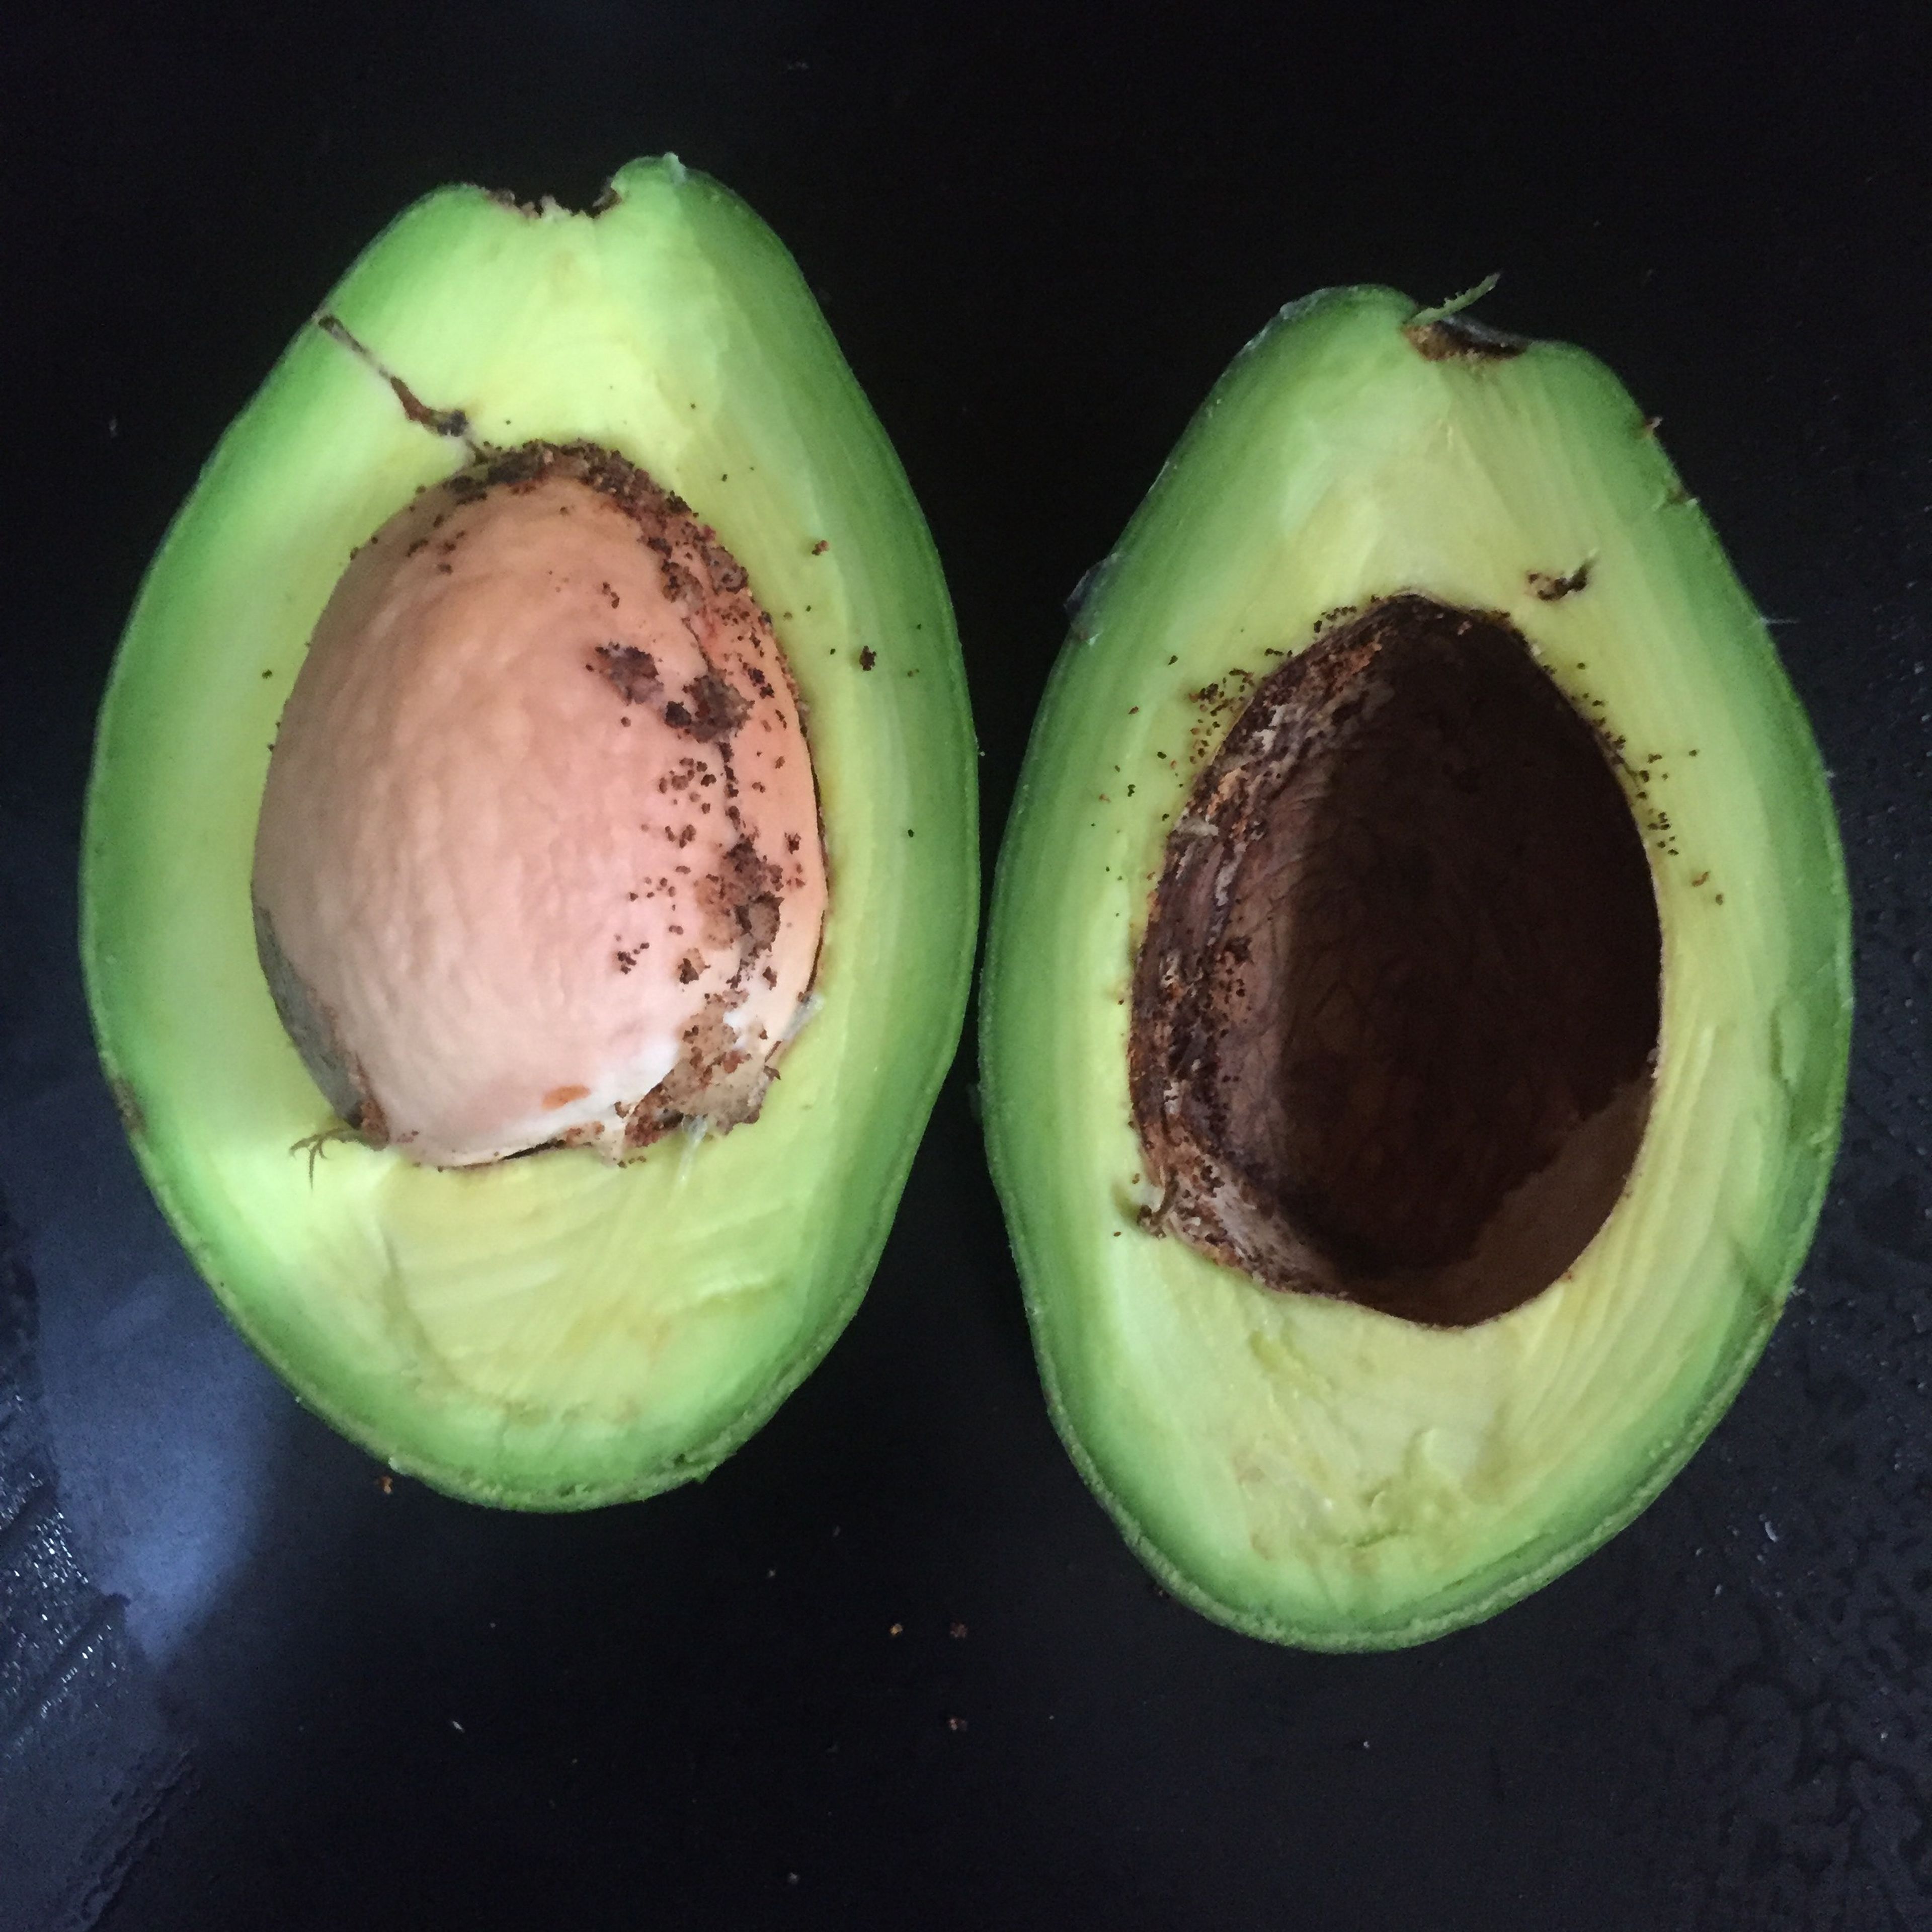 4. Cut avocado